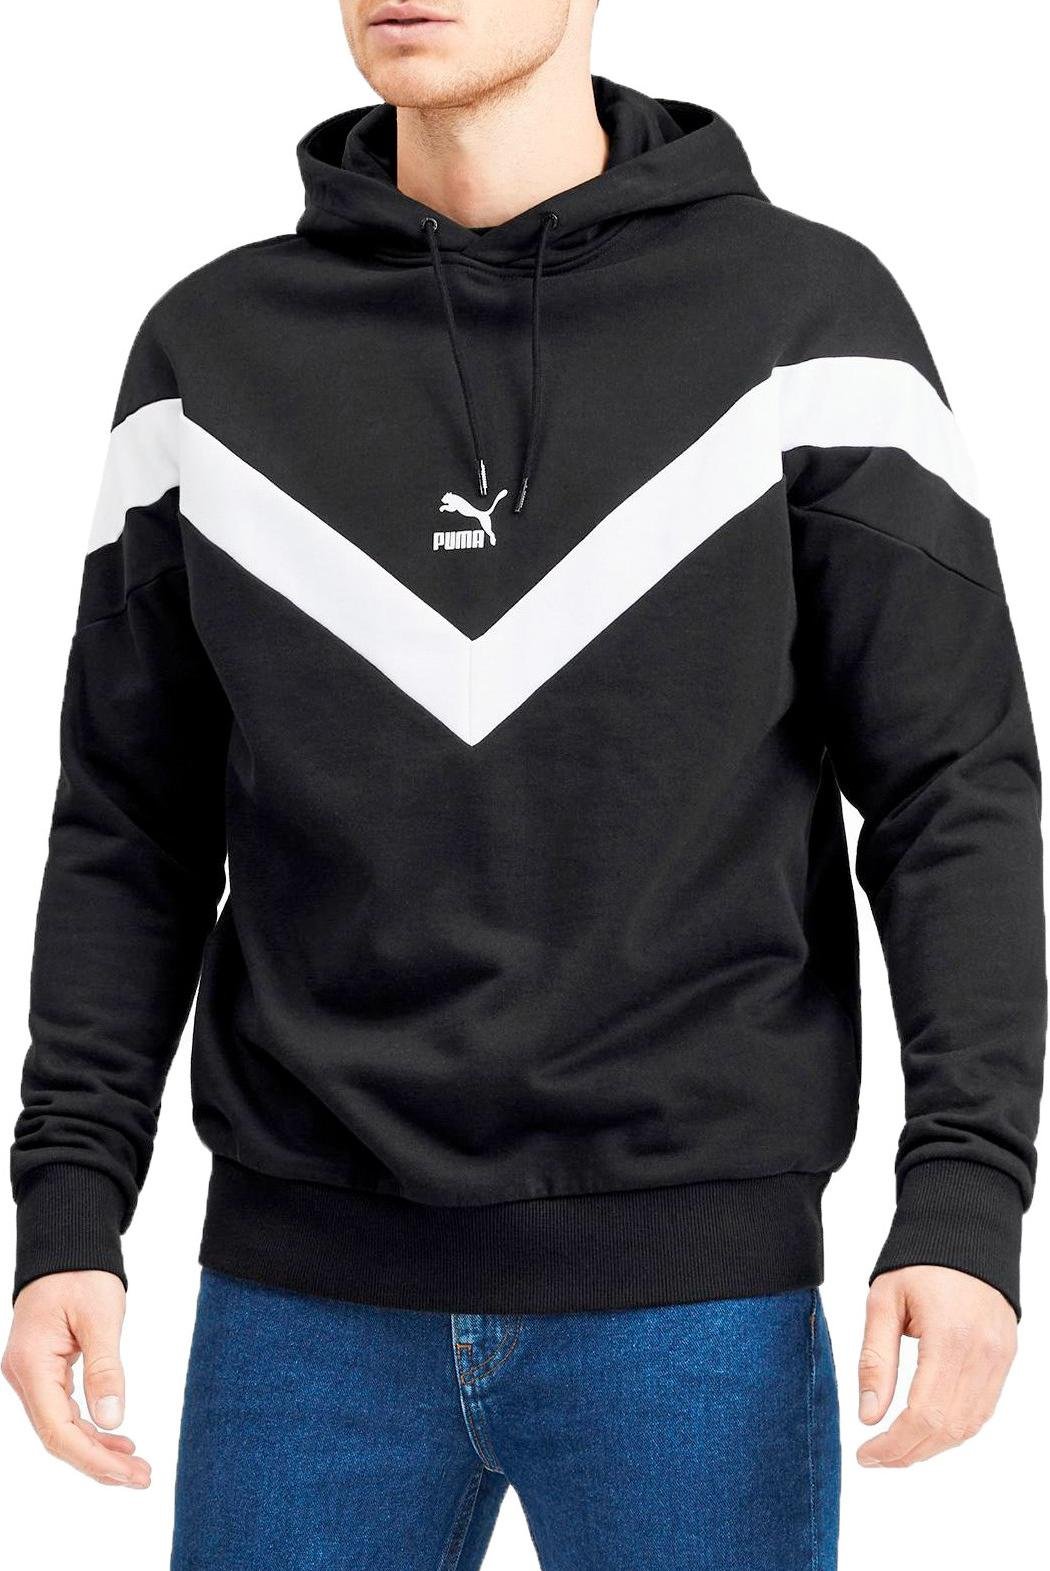 Hooded sweatshirt Puma iconic mcs hoody tr